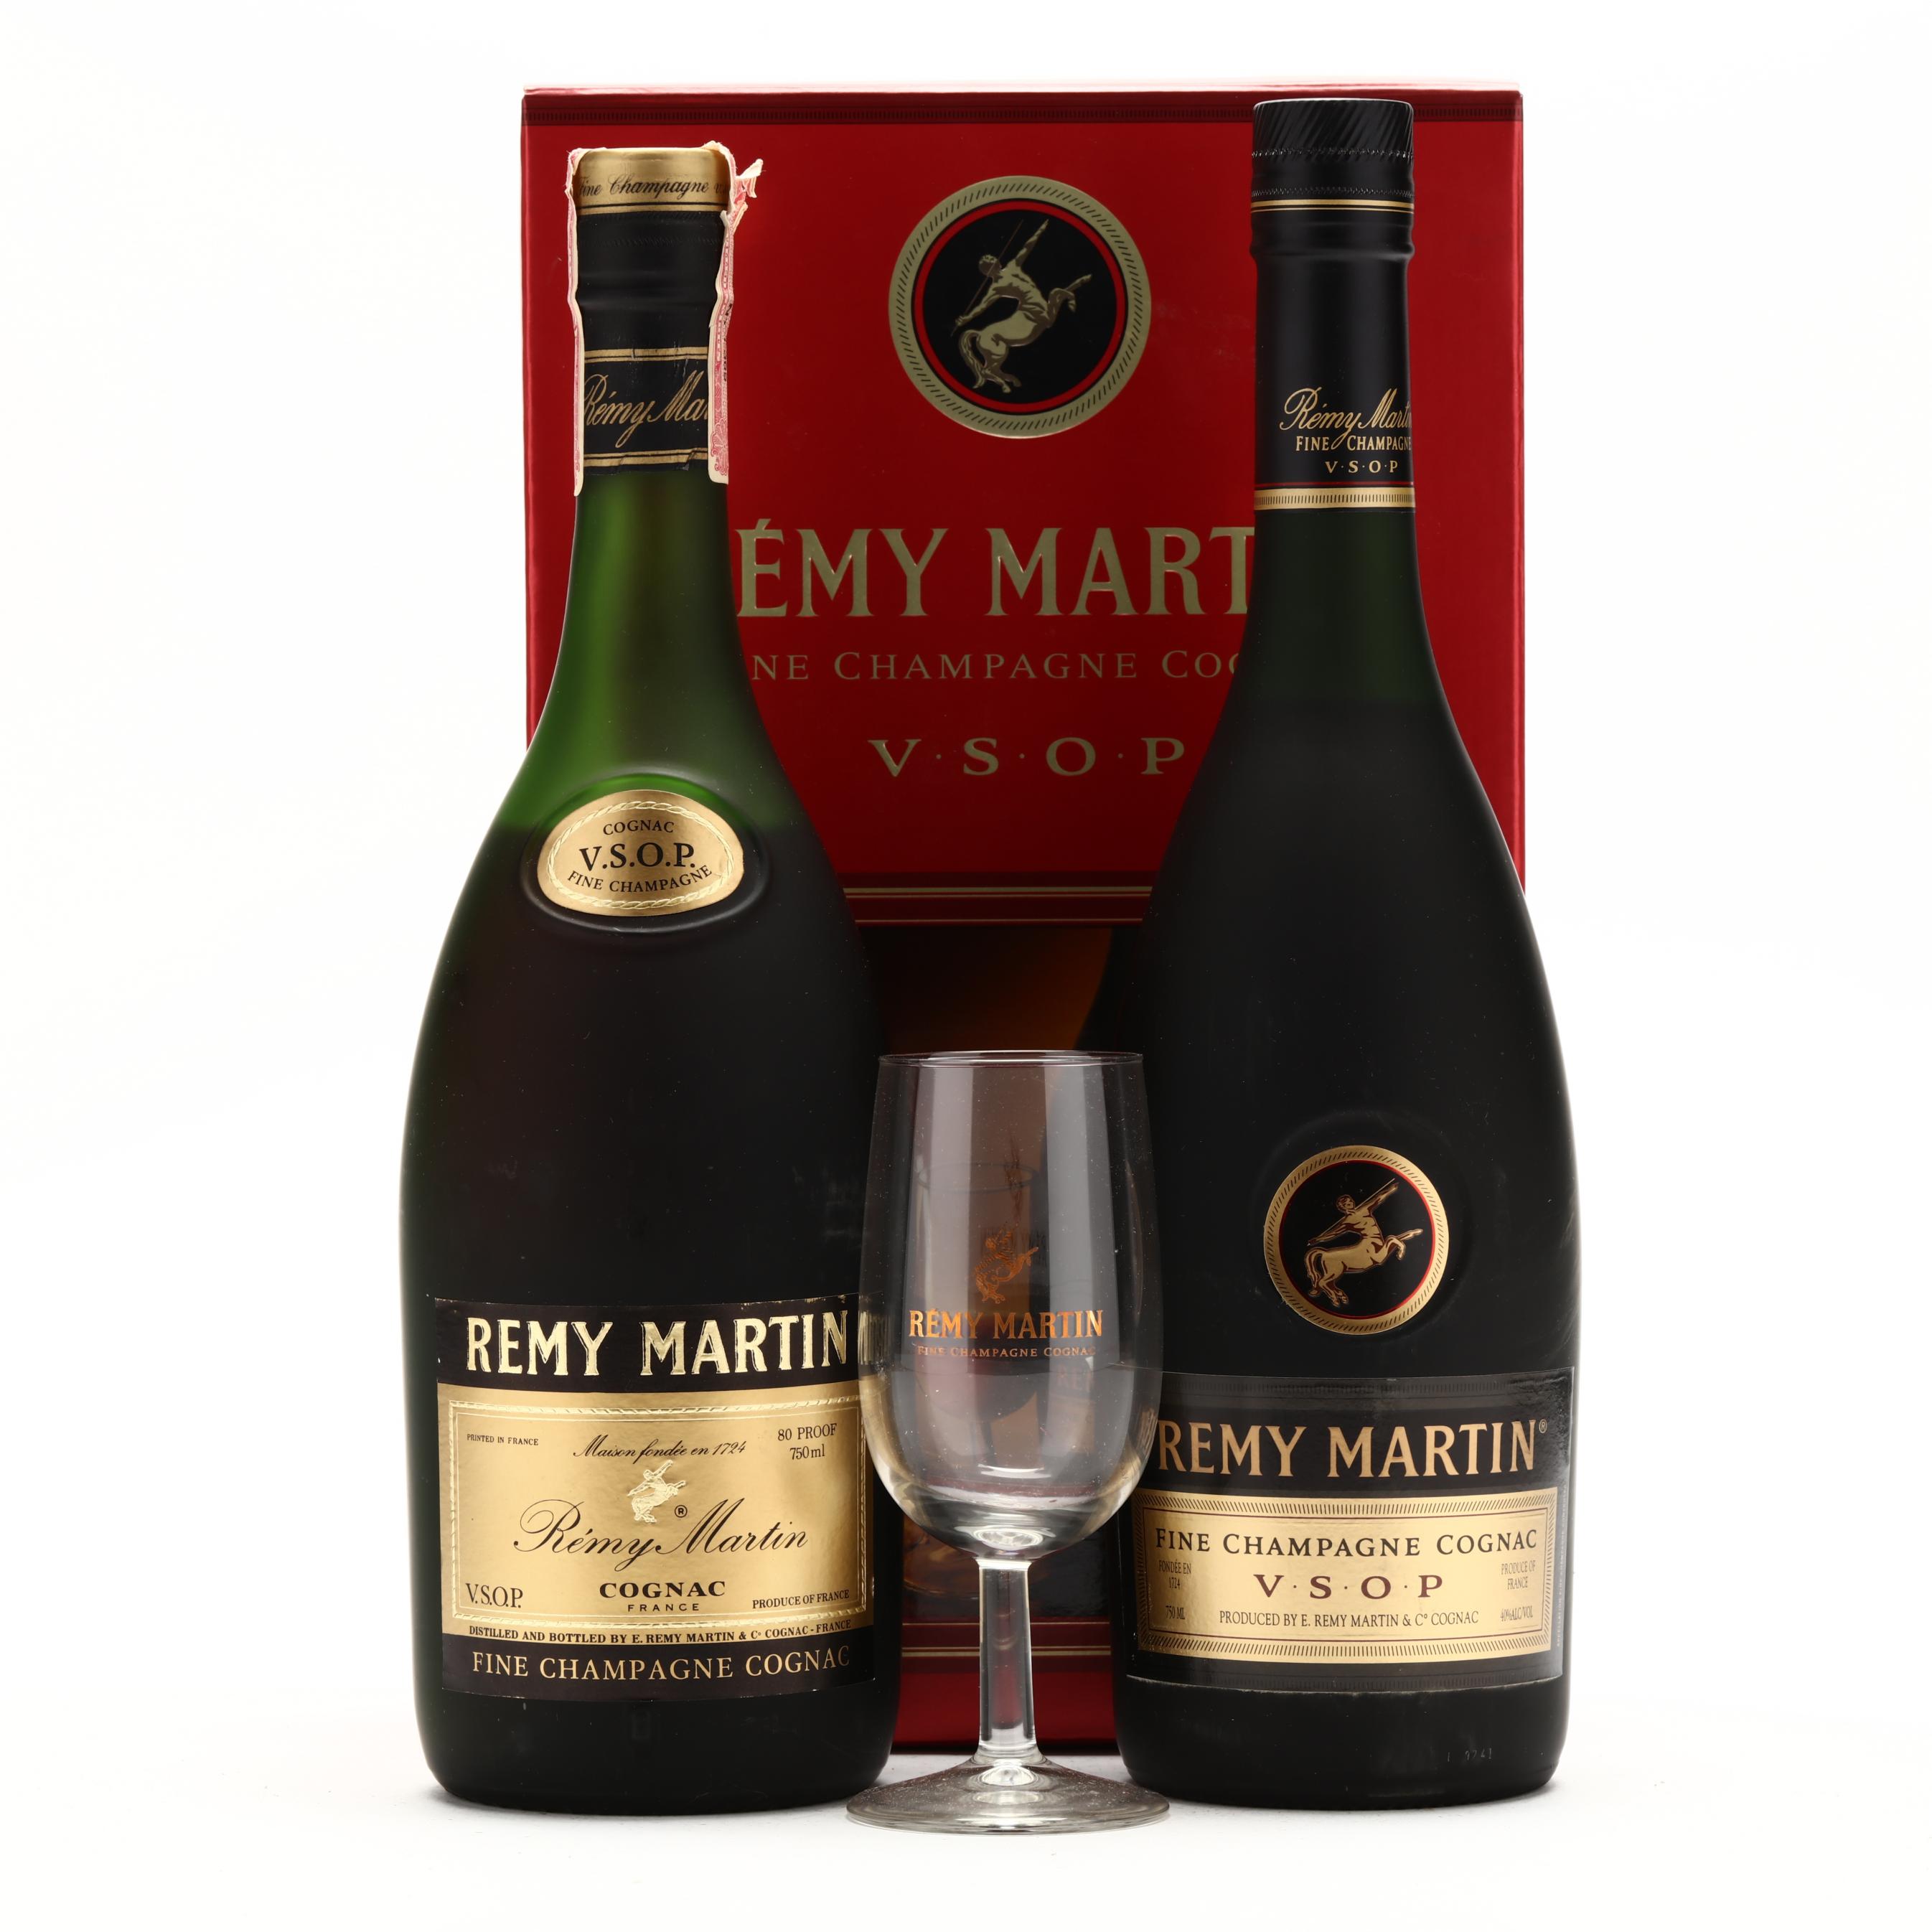 Sold at Auction: Remy Martin Cognac Bottle